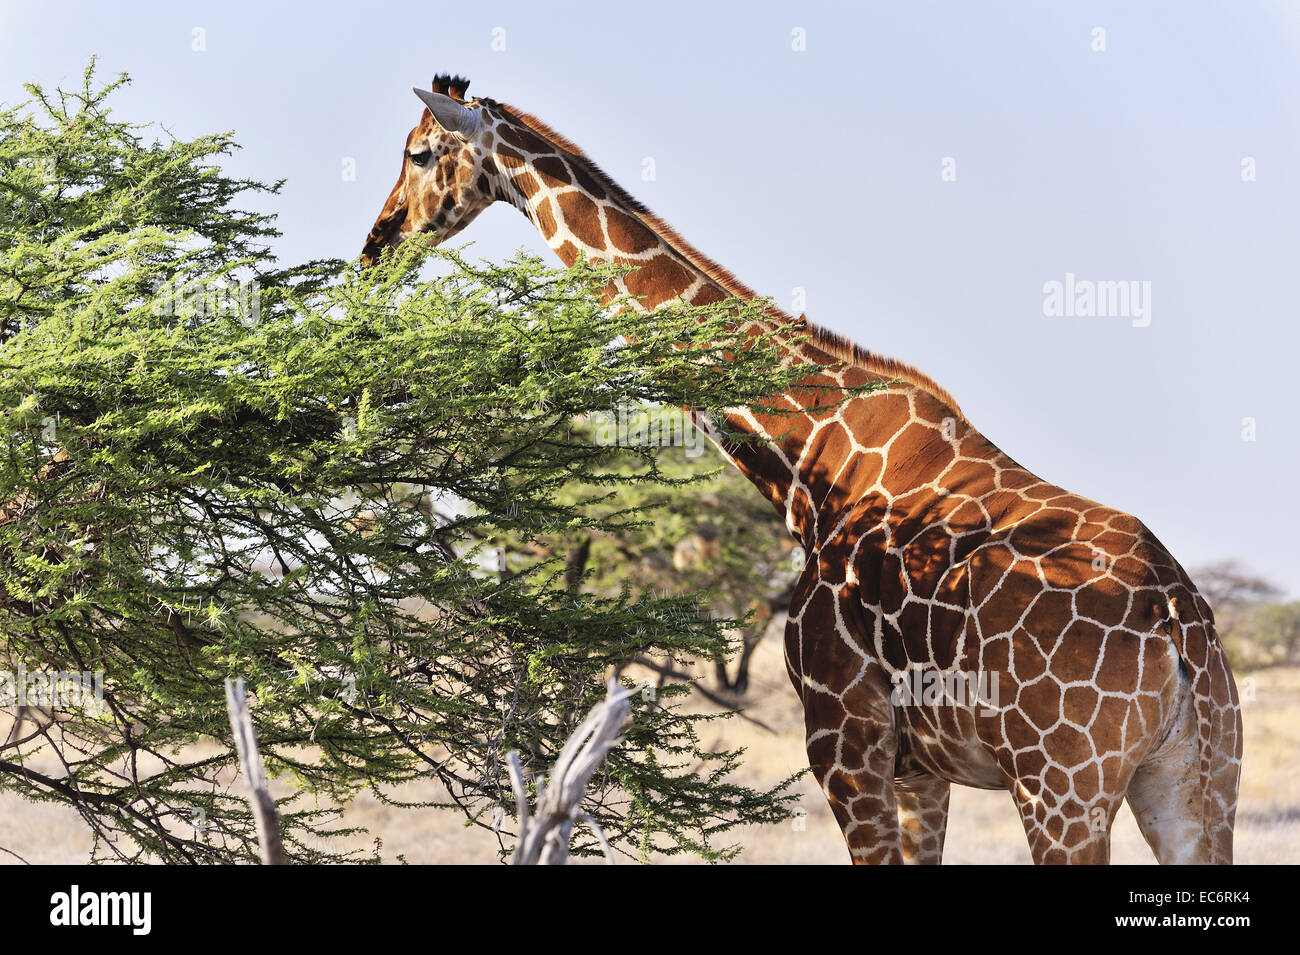 Giraffe eating leaves from an acacia tree Stock Photo